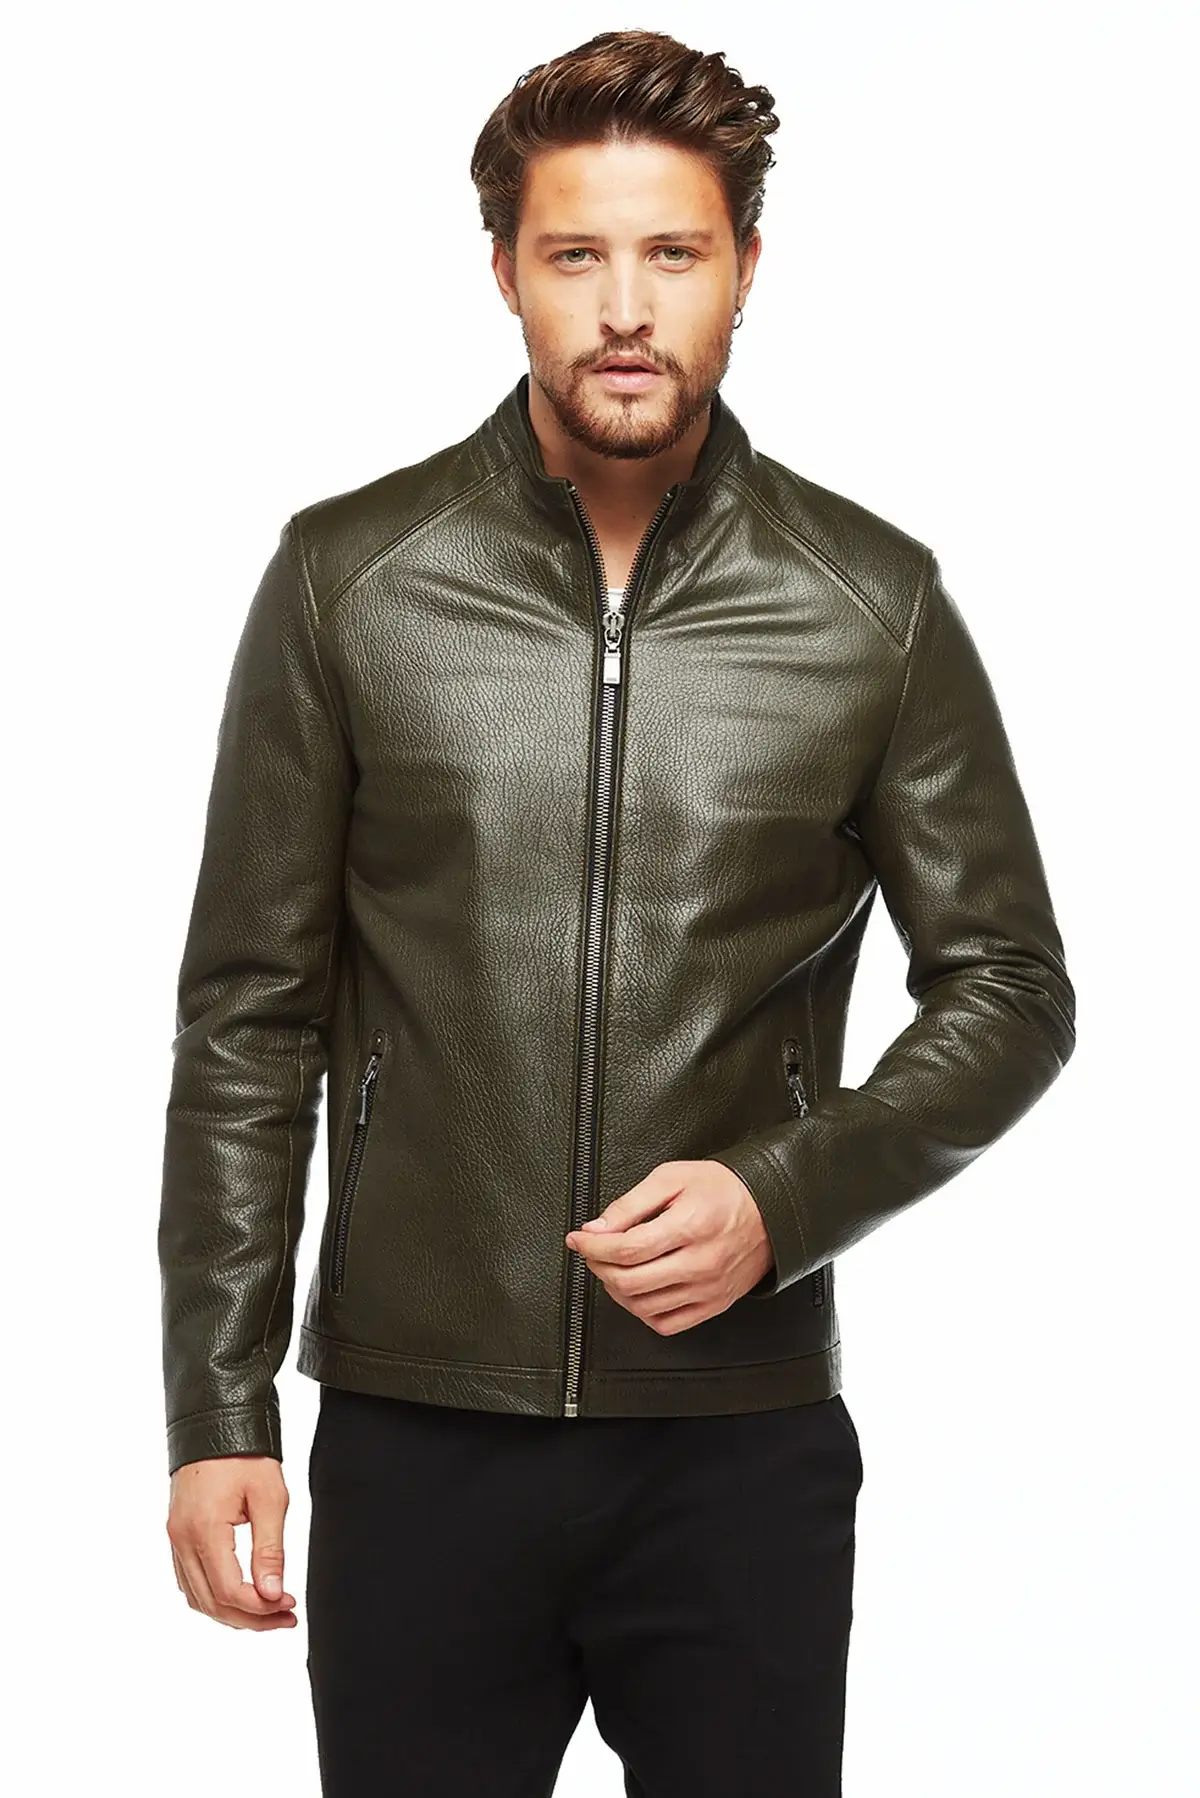 Argen Men's 100 % Real Olive Green Leather New Zealand Jacket